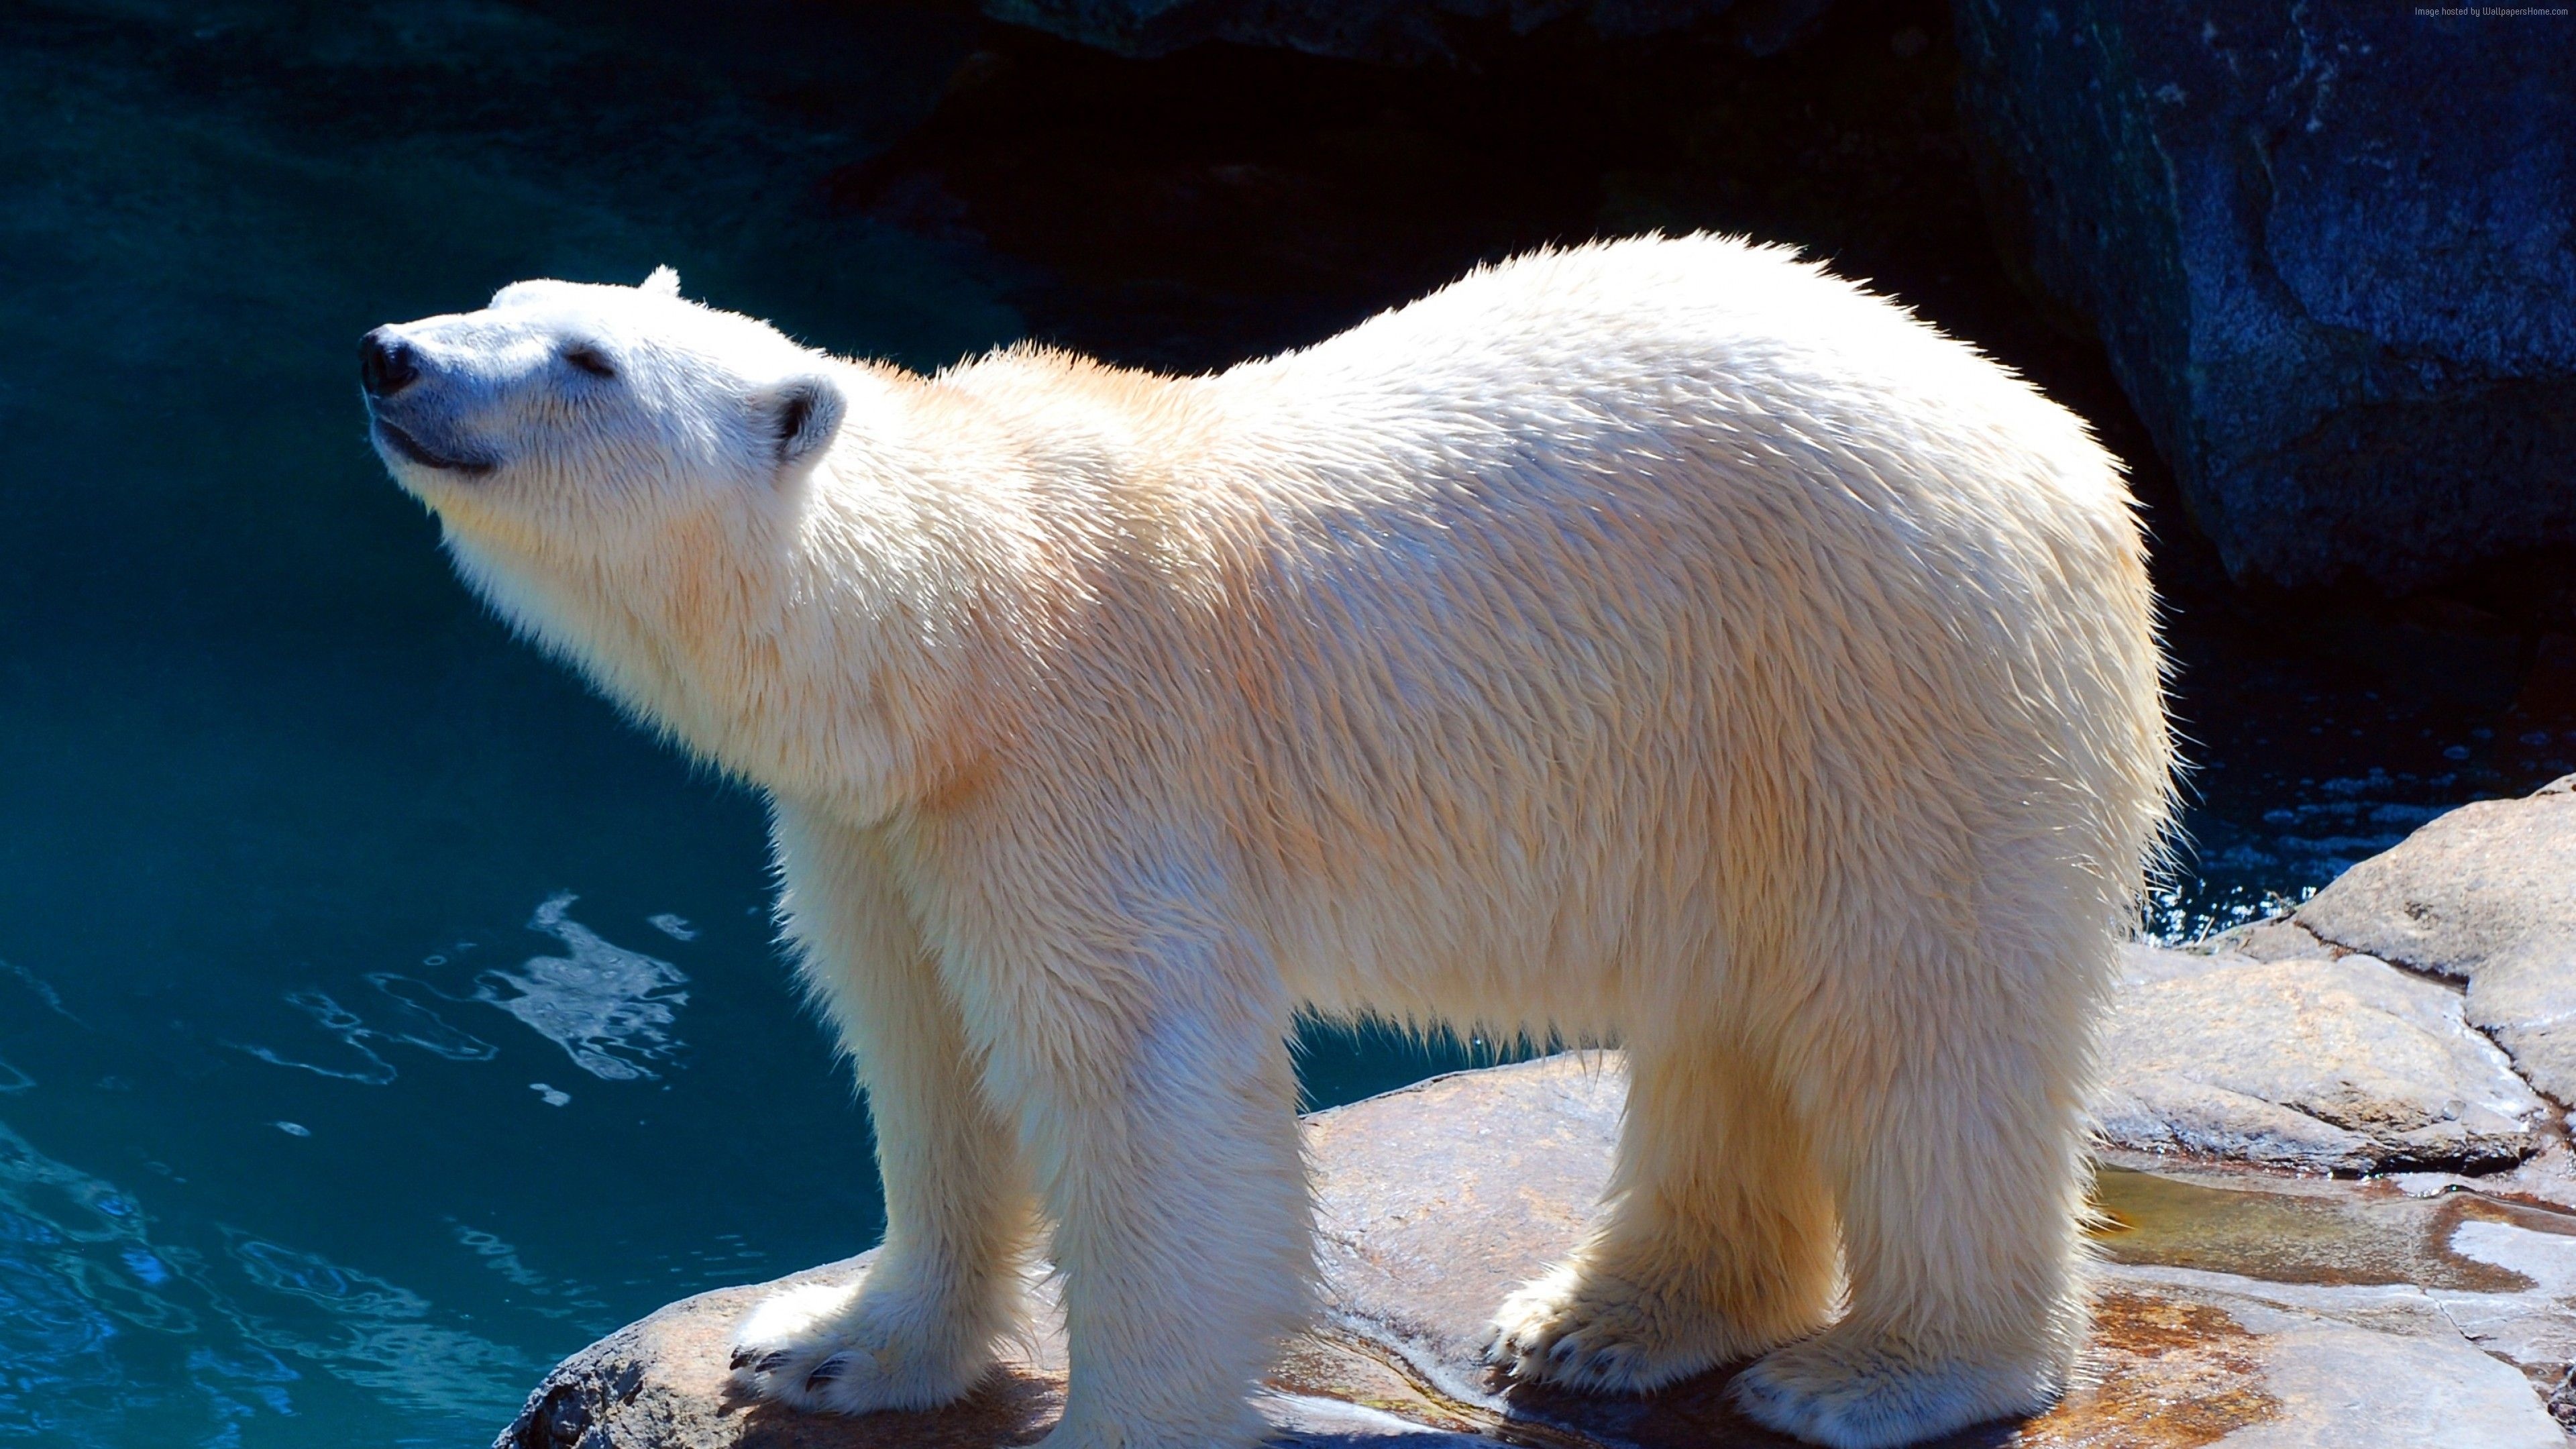 Cute polar bear, 4K wallpaper, Zoo bear, Adorable Arctic animal, 3840x2160 4K Desktop